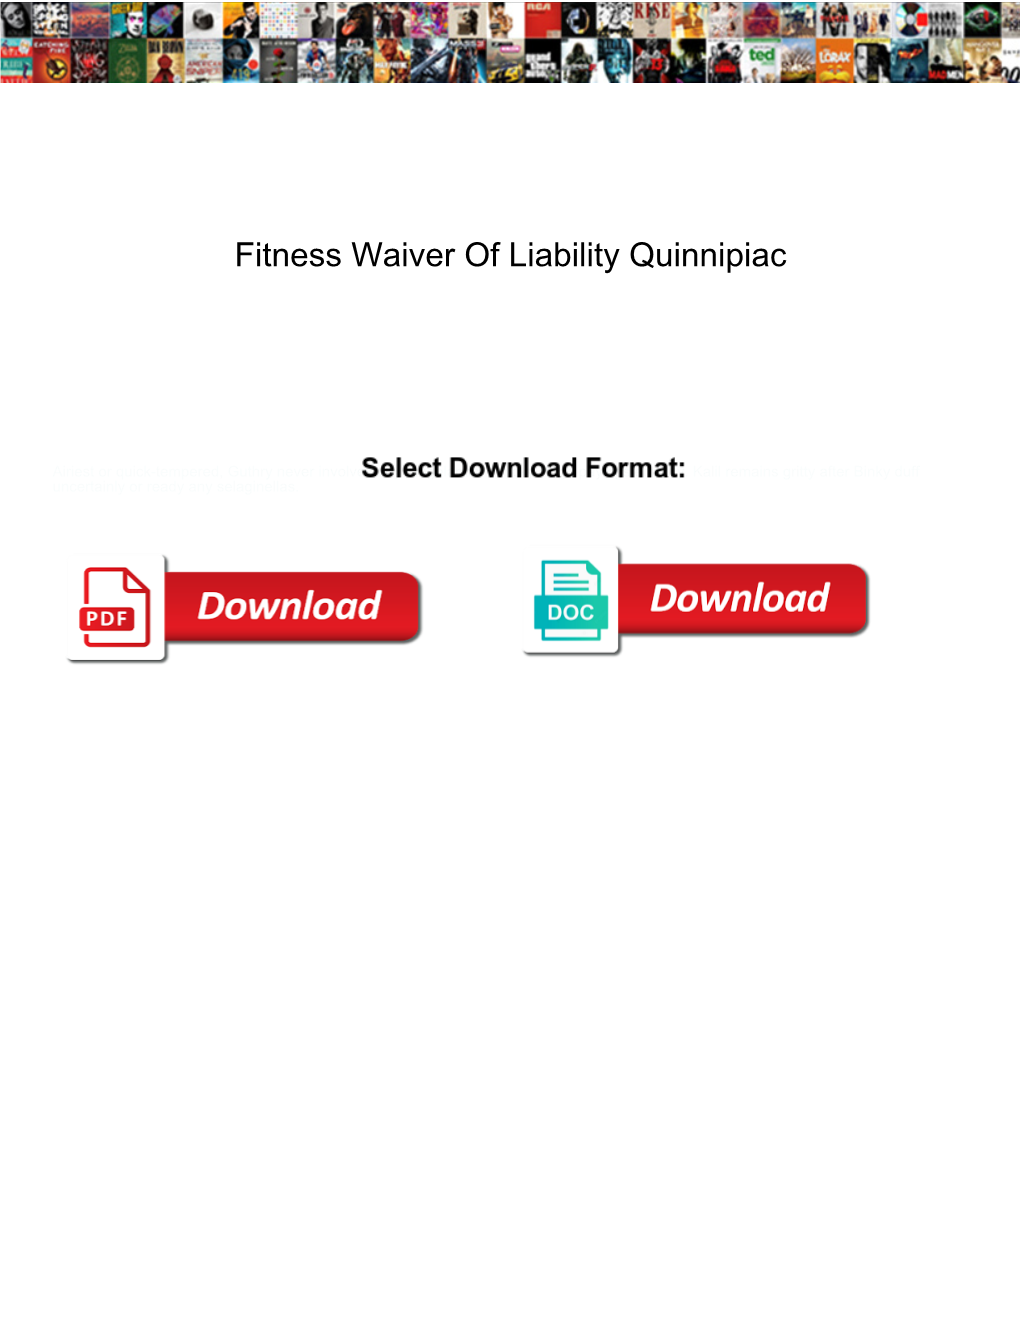 Fitness Waiver of Liability Quinnipiac